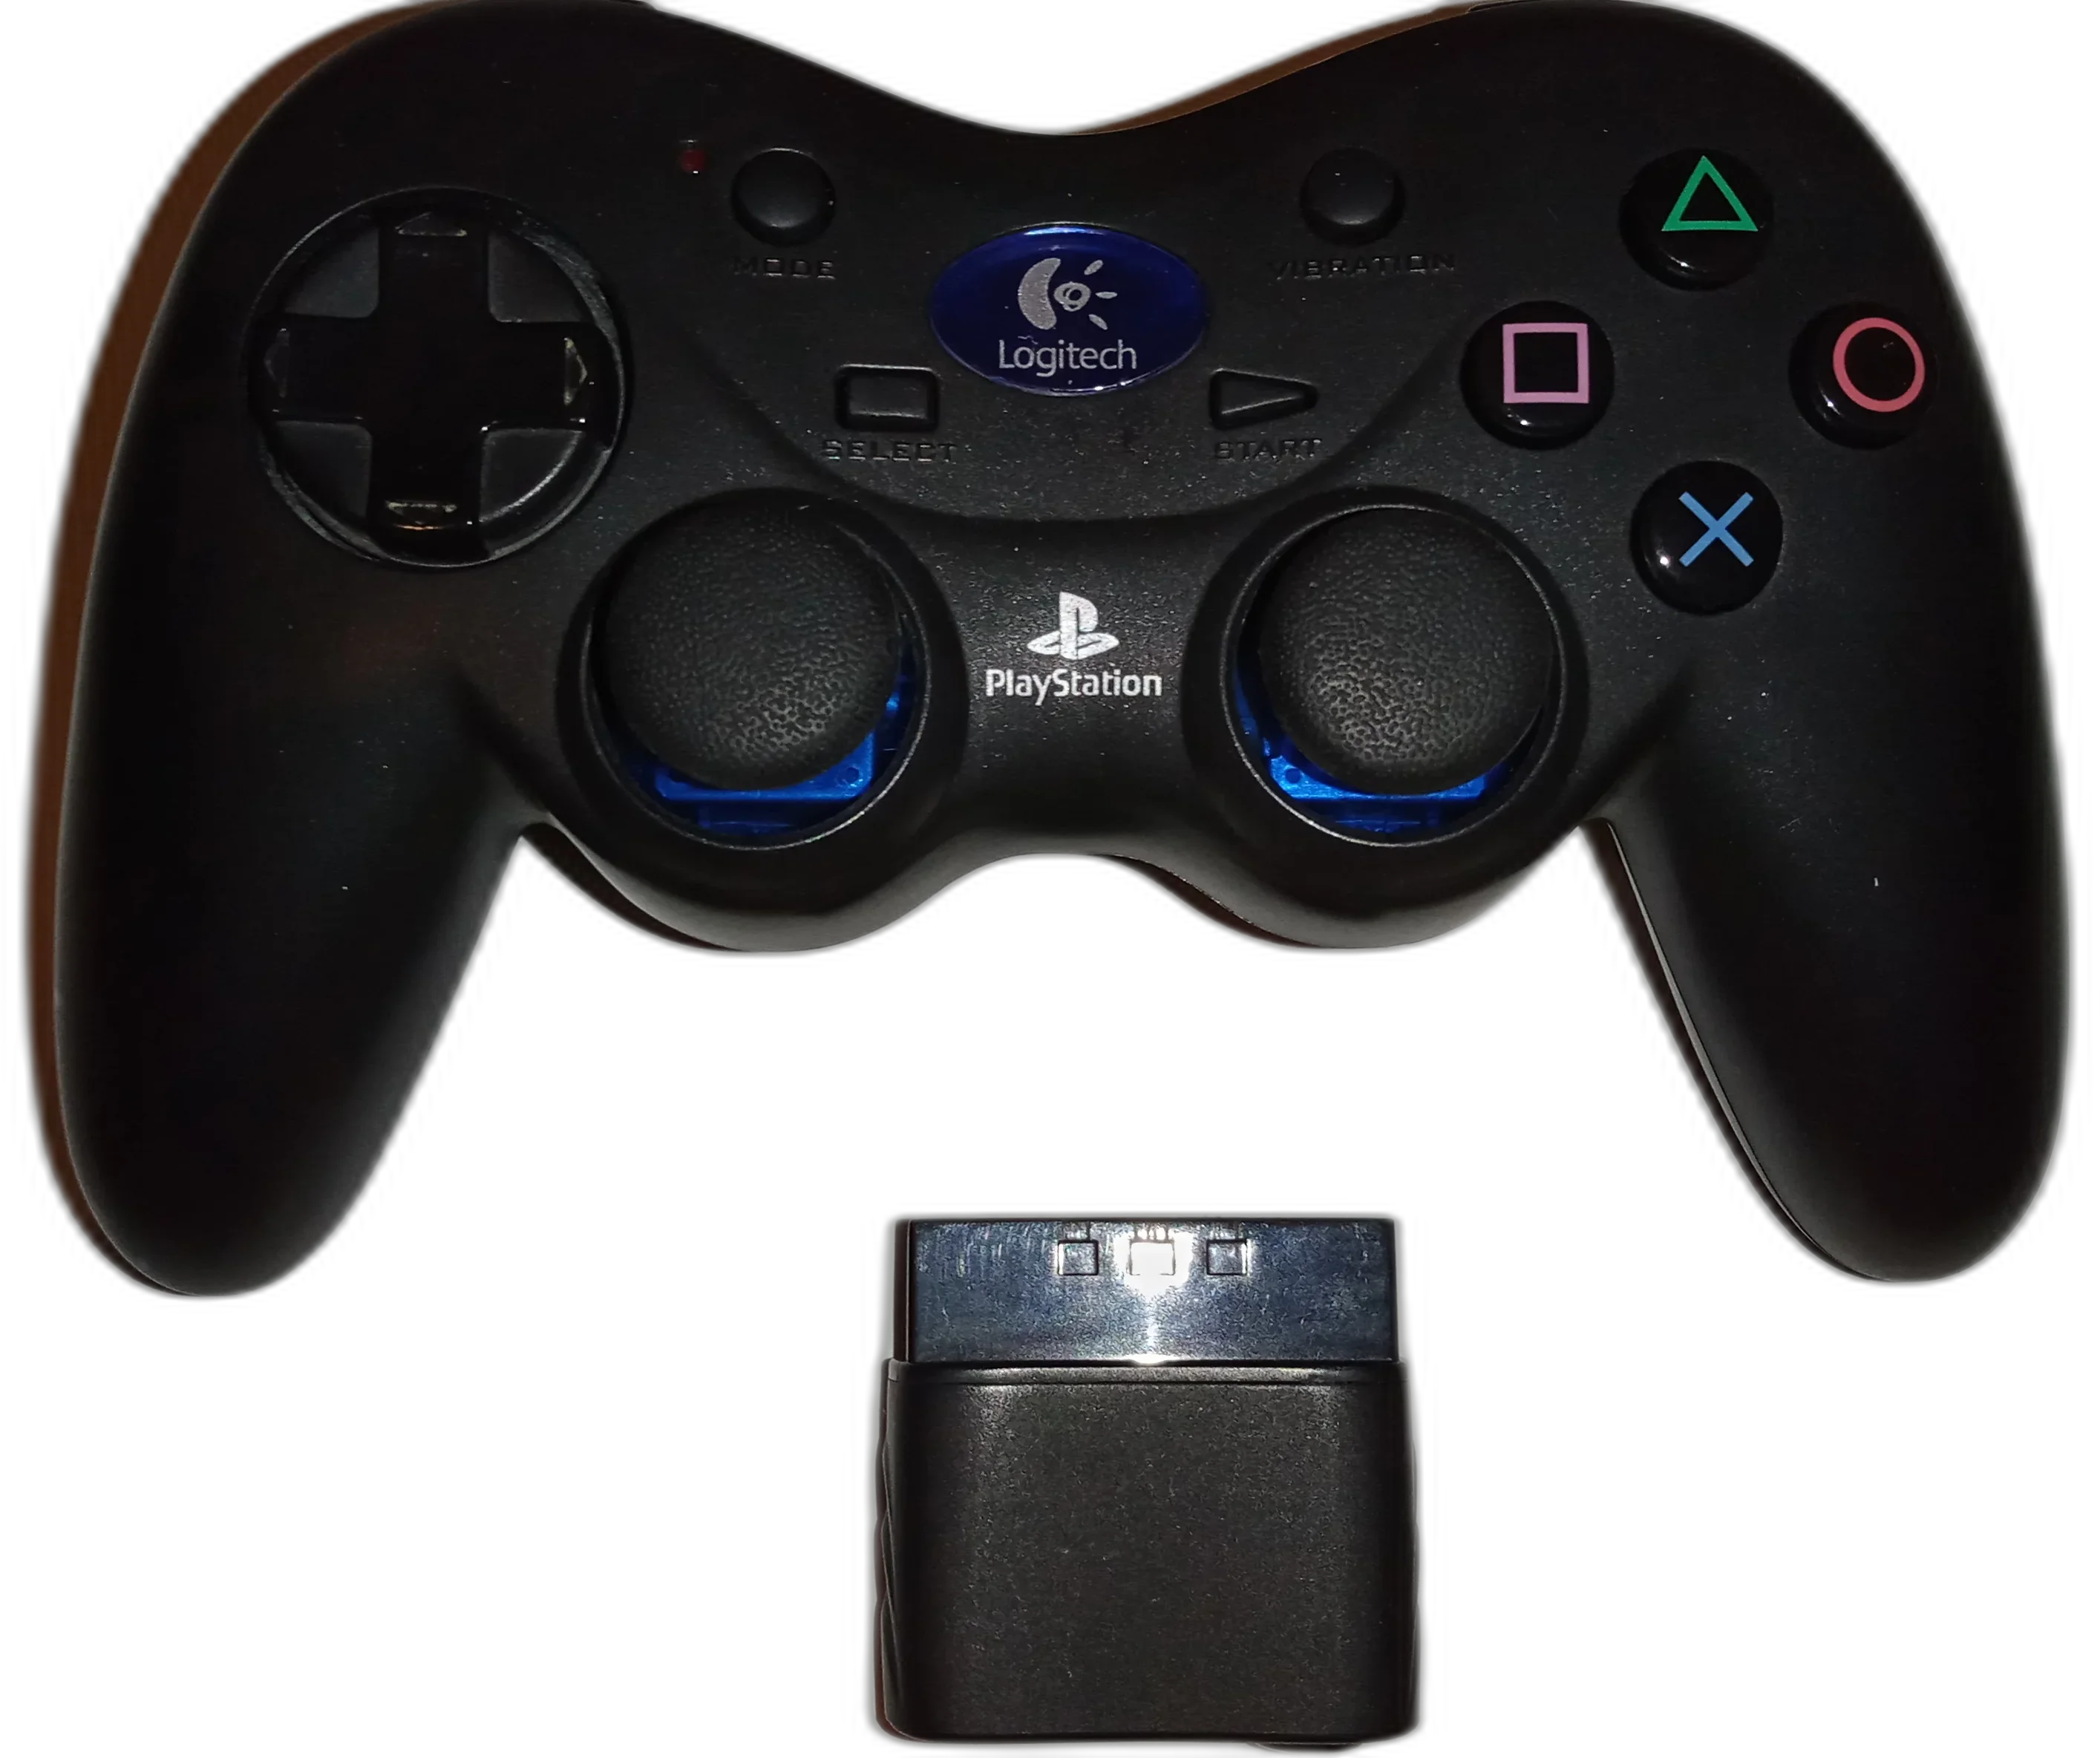  Logitech PlayStation 2 Cordless Action Controller